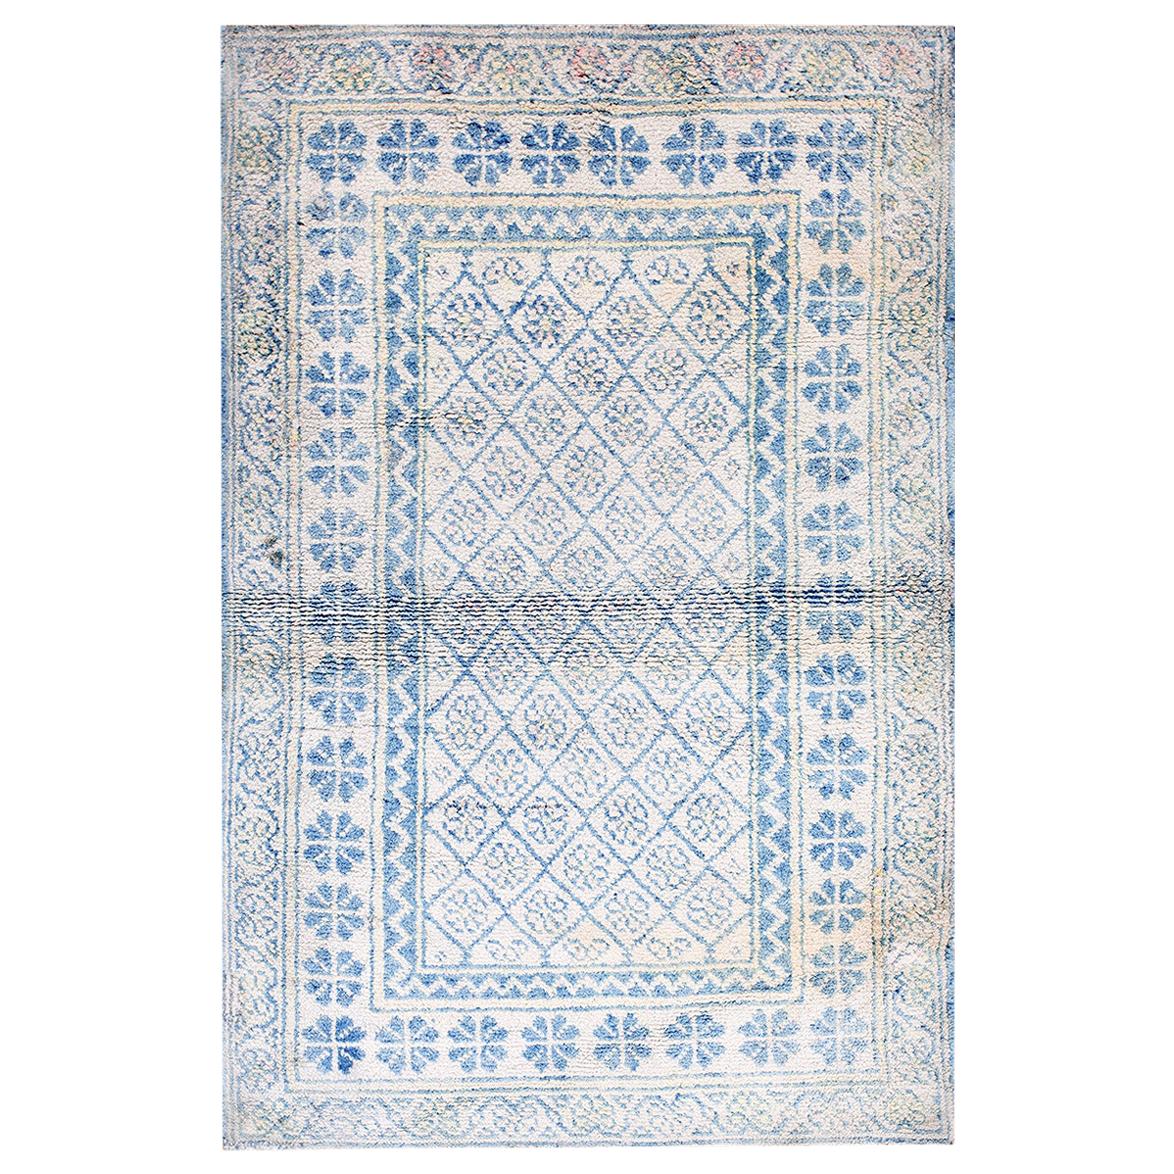 Antique Indian Agra Cotton Rug